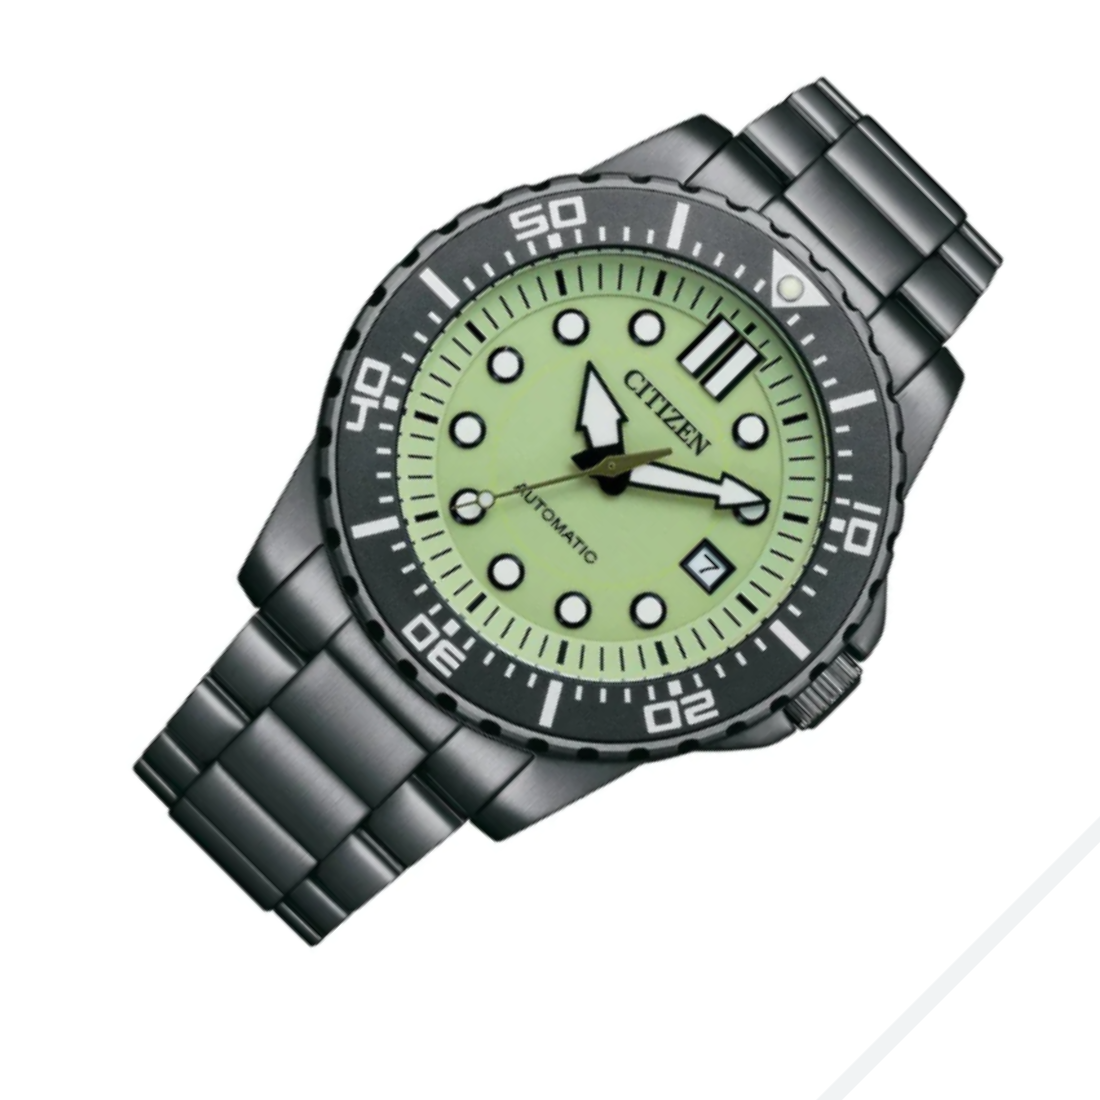 Citizen Automatic NJ0177-84X NJ0177 Mint Green Dial Watch (PRE-ORDER)